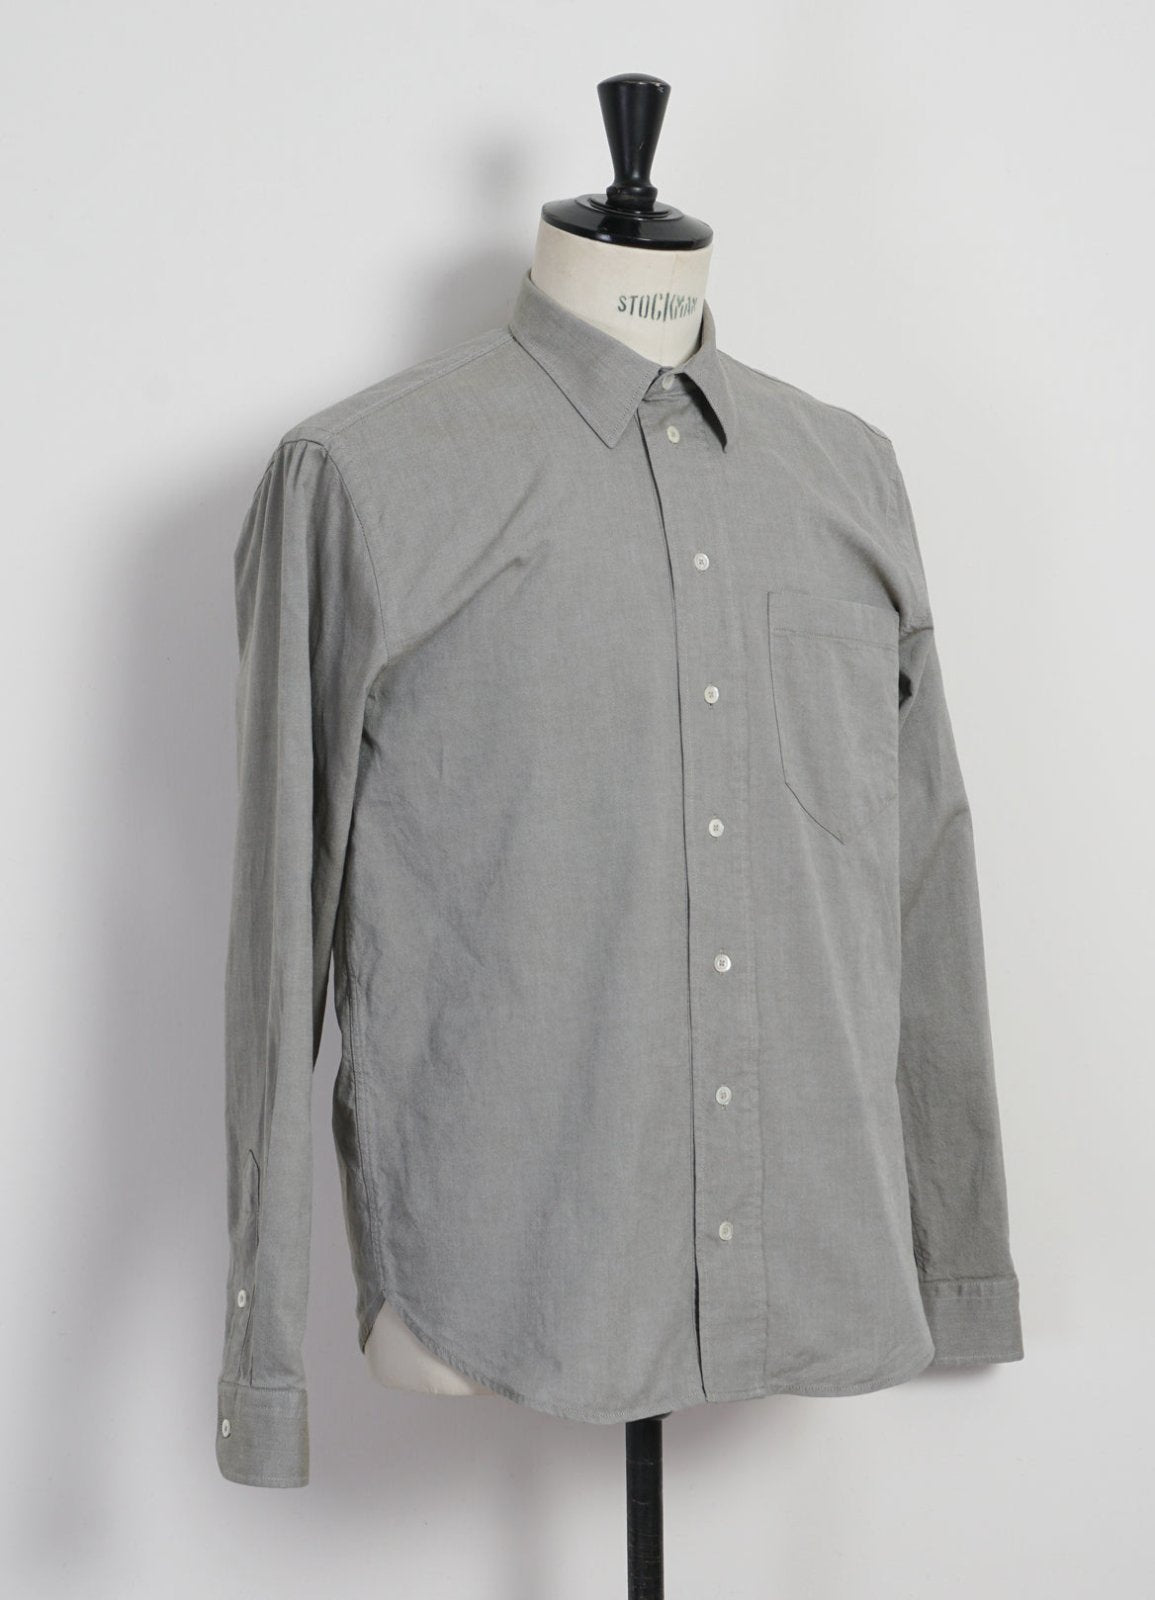 HANSEN GARMENTS - RAYMOND | Relaxed Classic Shirt | Khaki - HANSEN Garments